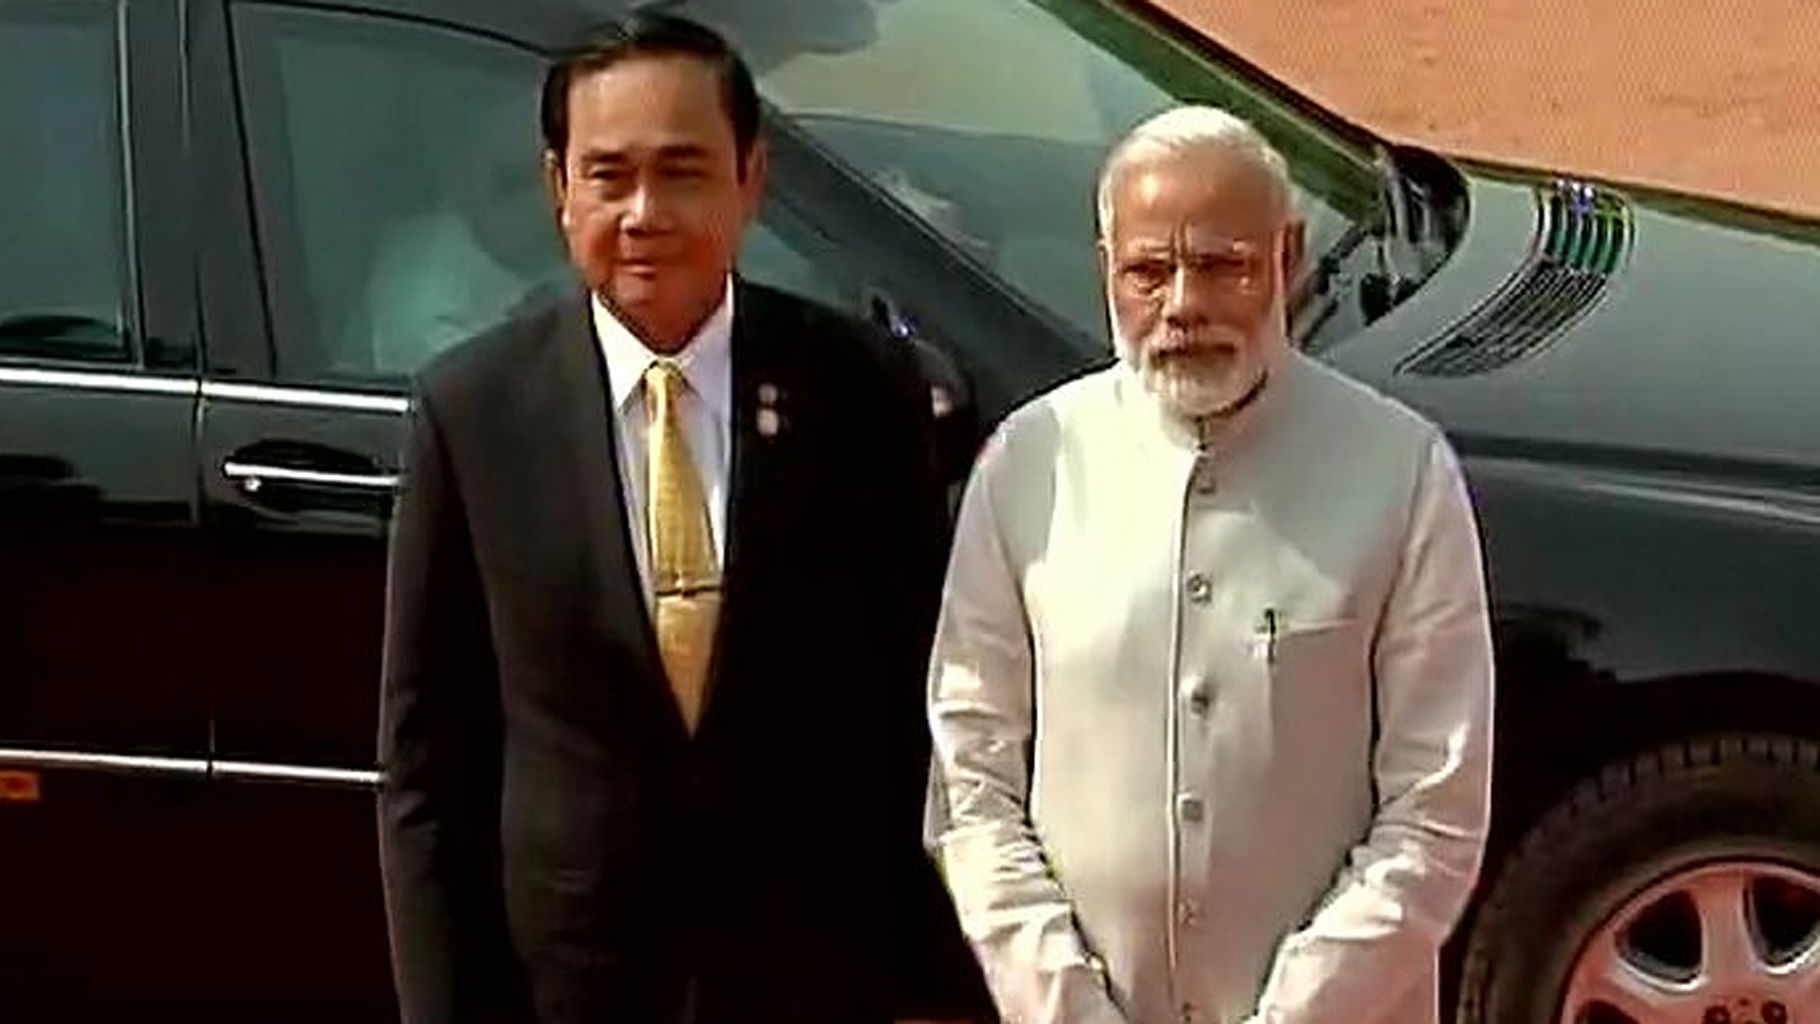 PM Modi with his Thai counterpart at Rashtrapati Bhavan. (Photo Courtesy: <a href="https://twitter.com/ANI_news/status/743659268998475776">Twitter/@ANI</a>)